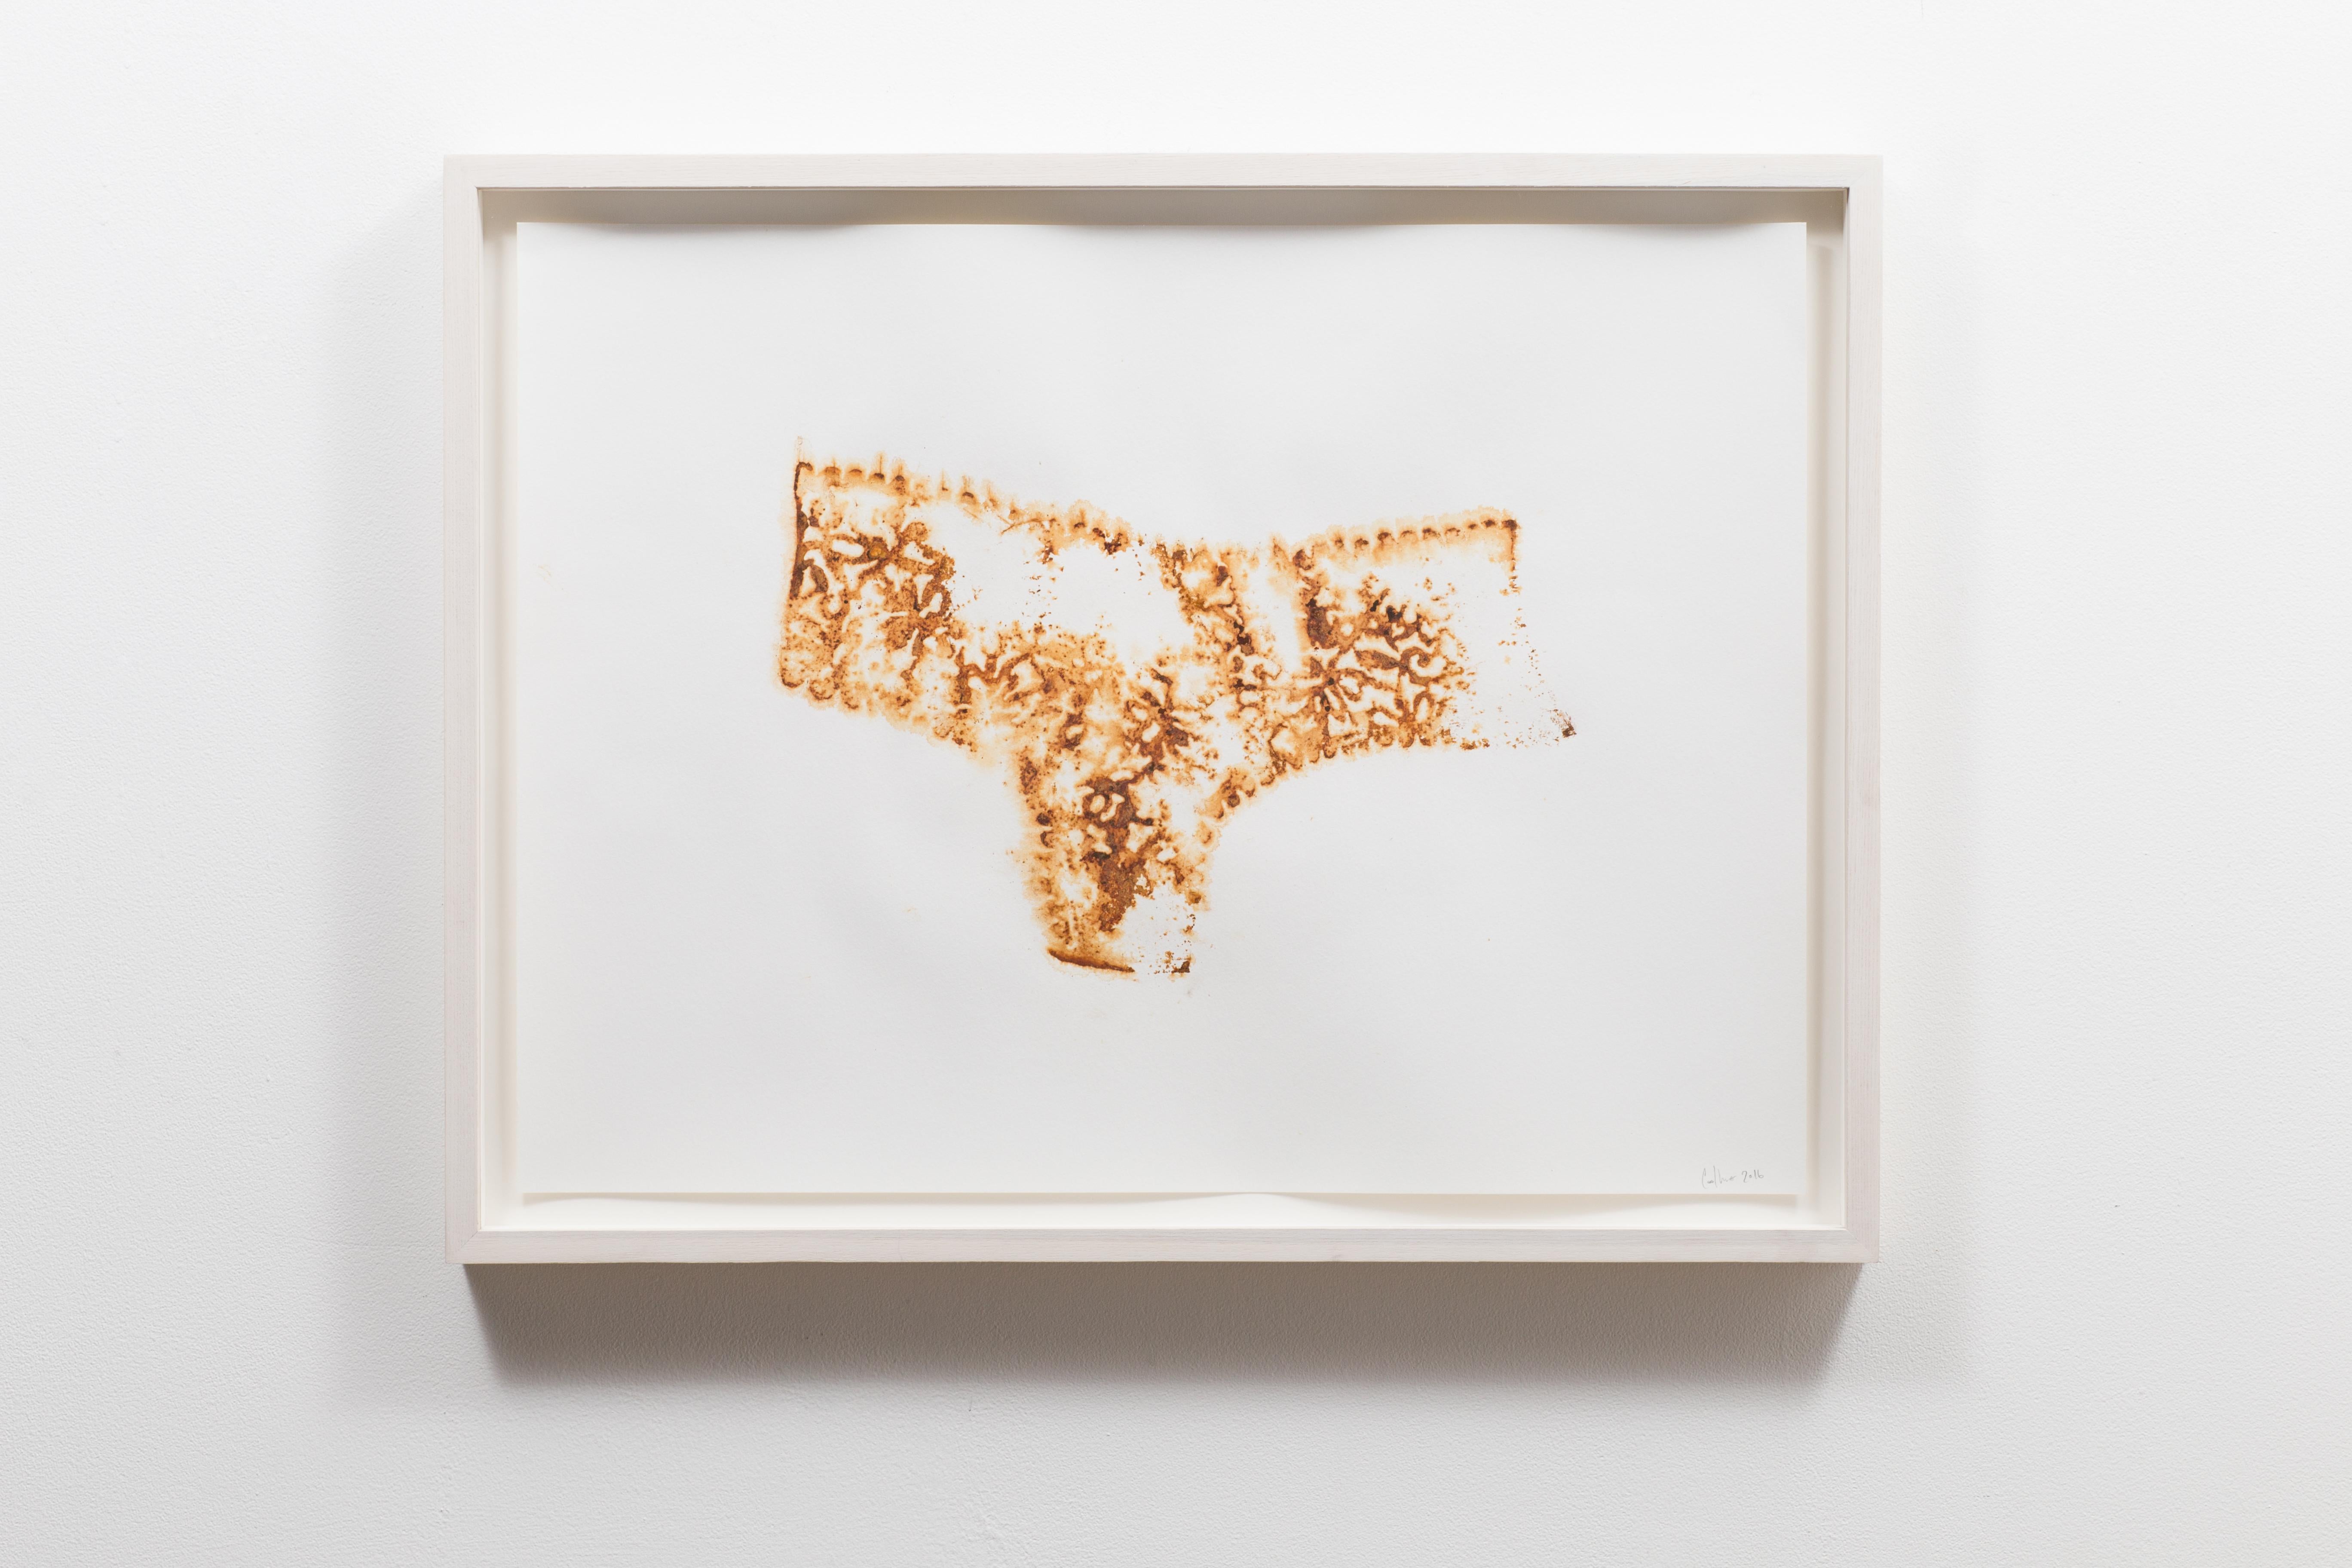 Cal Lane Figurative Print - Pantie stains #2